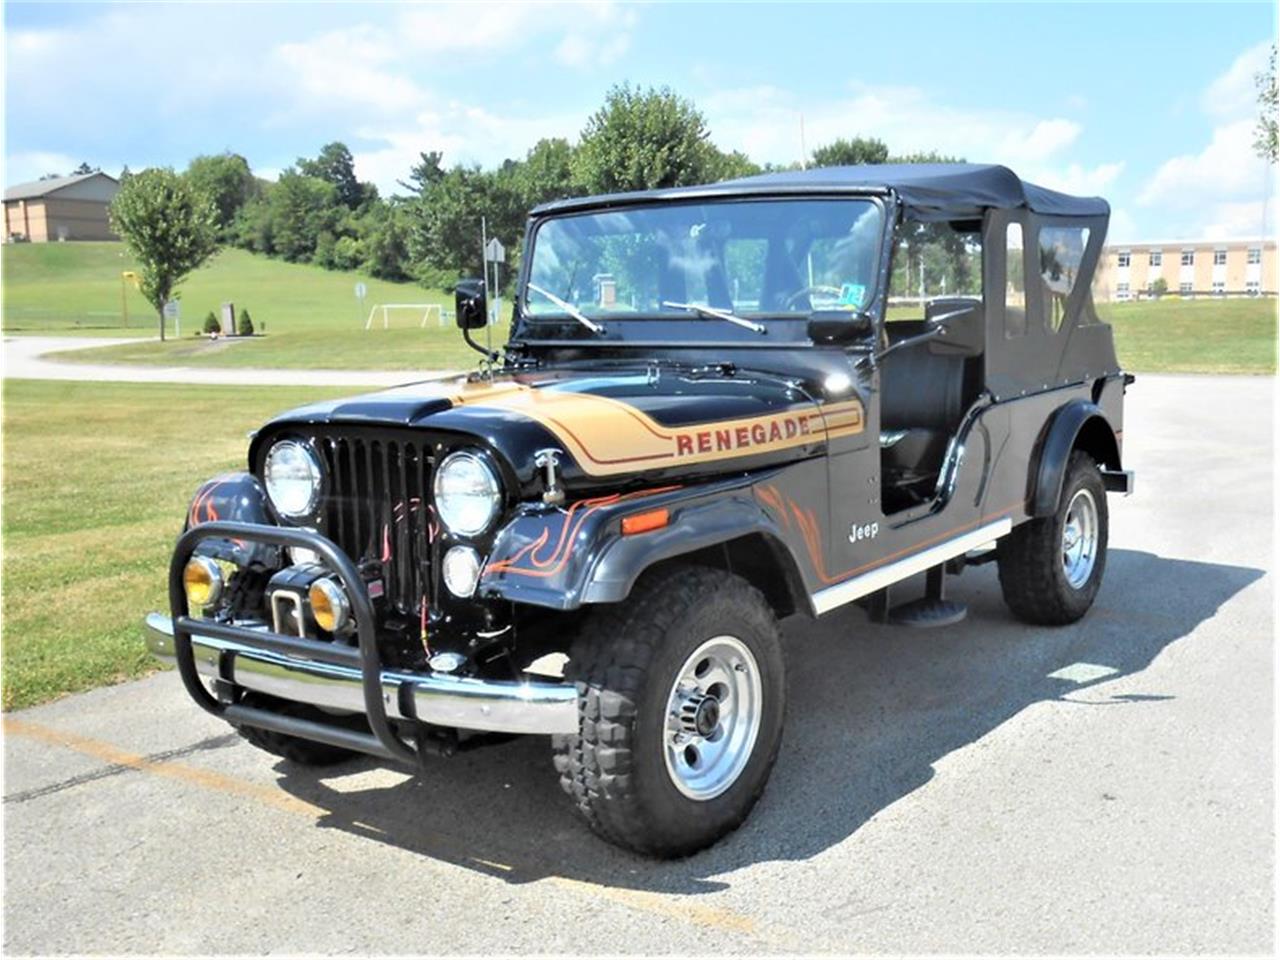 for sale at auction 1974 jeep wrangler in savannah, georgia for sale in savannah, ga